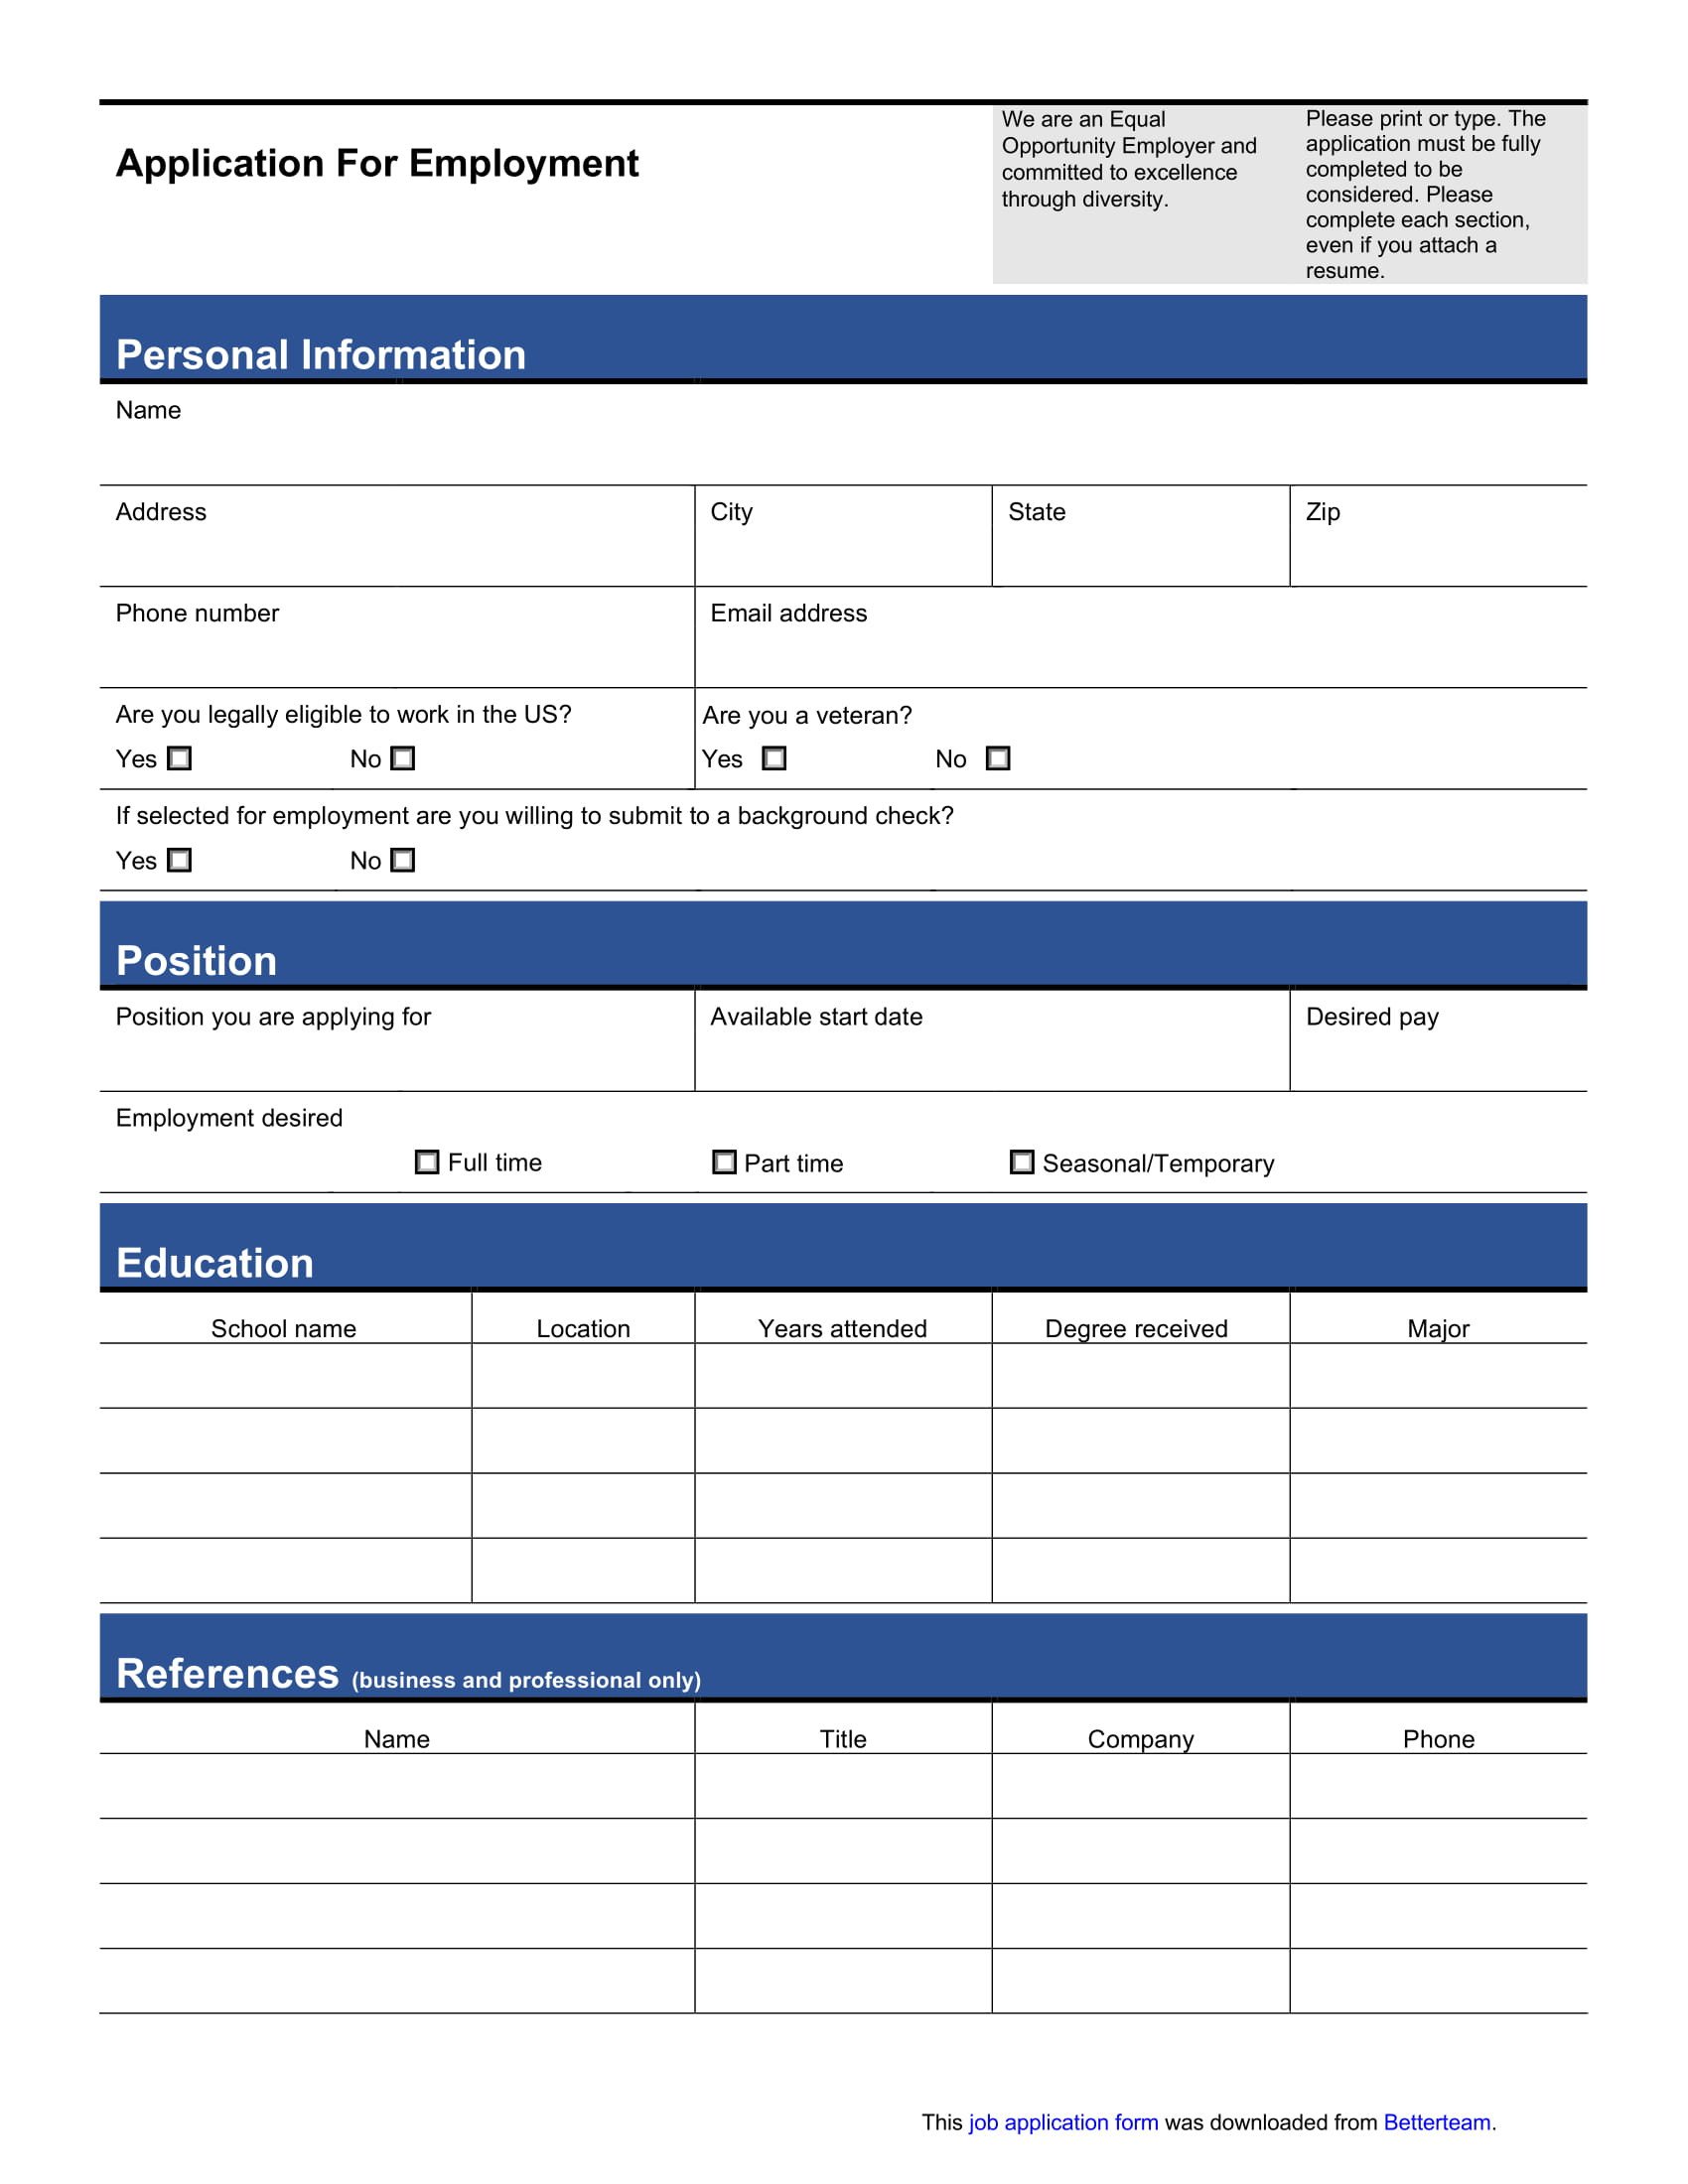 Standard Job Application Template Application form Sample